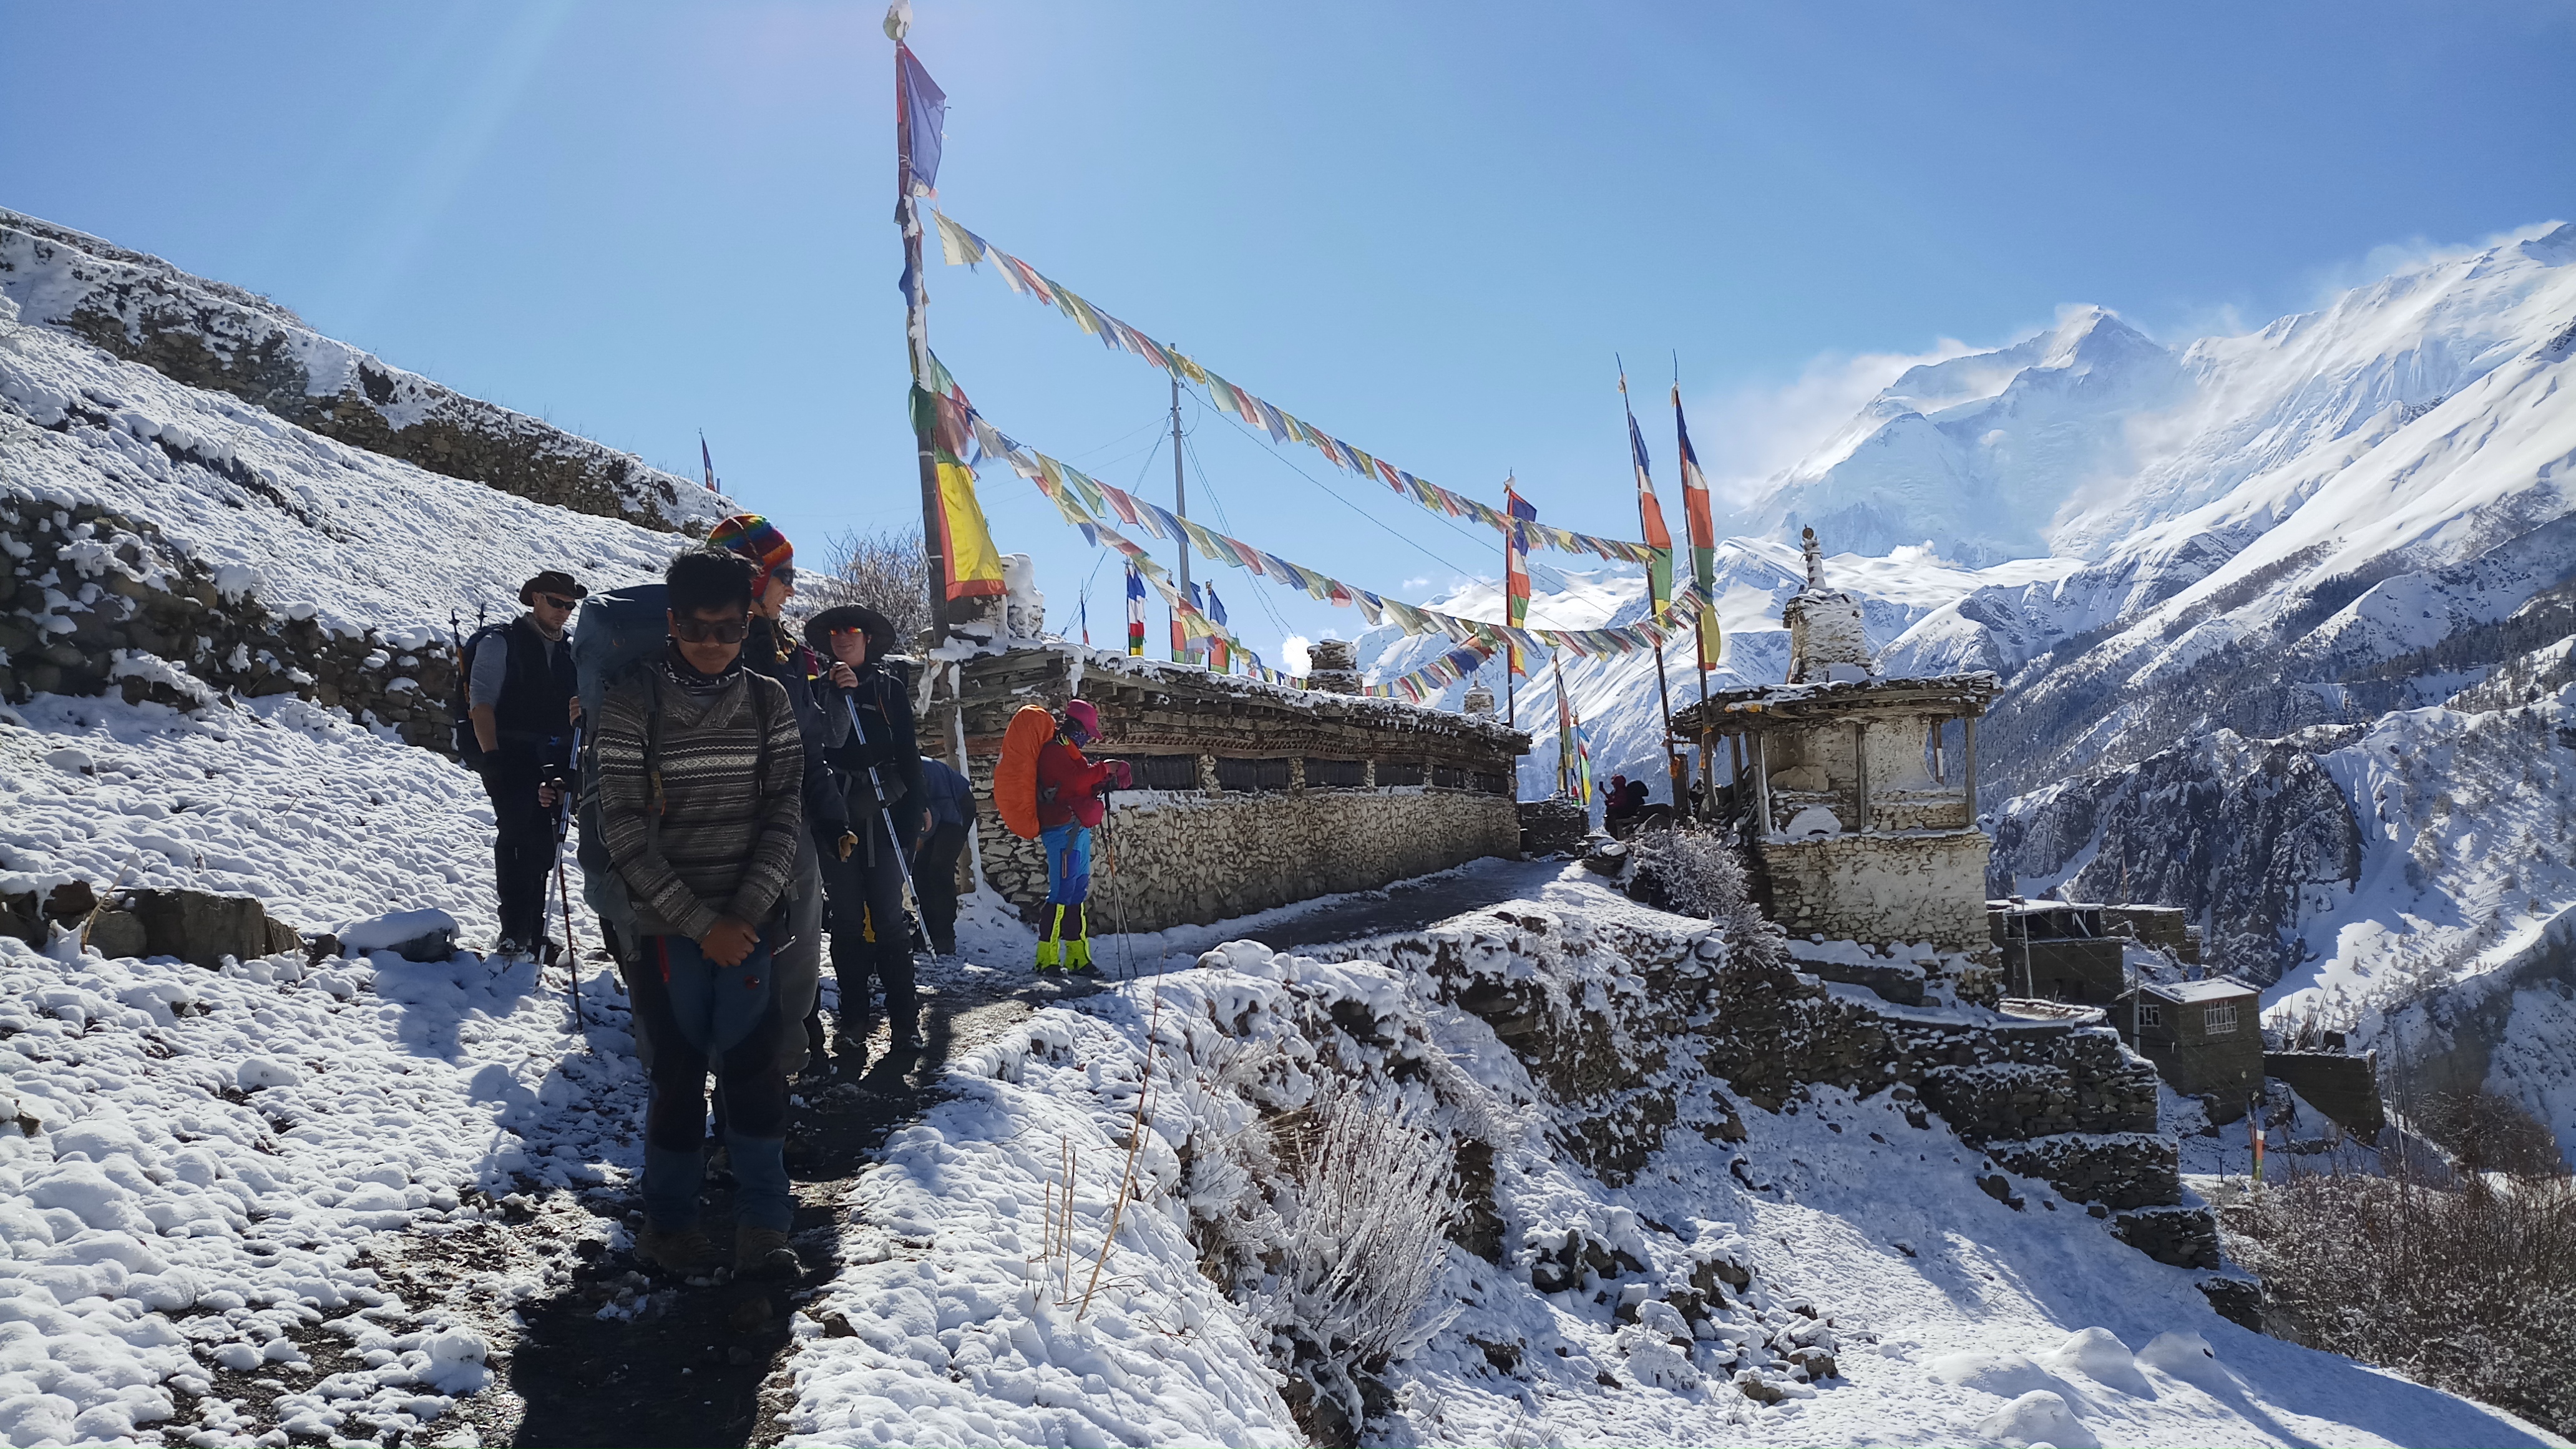 Annapurna circuit trek – 16 days